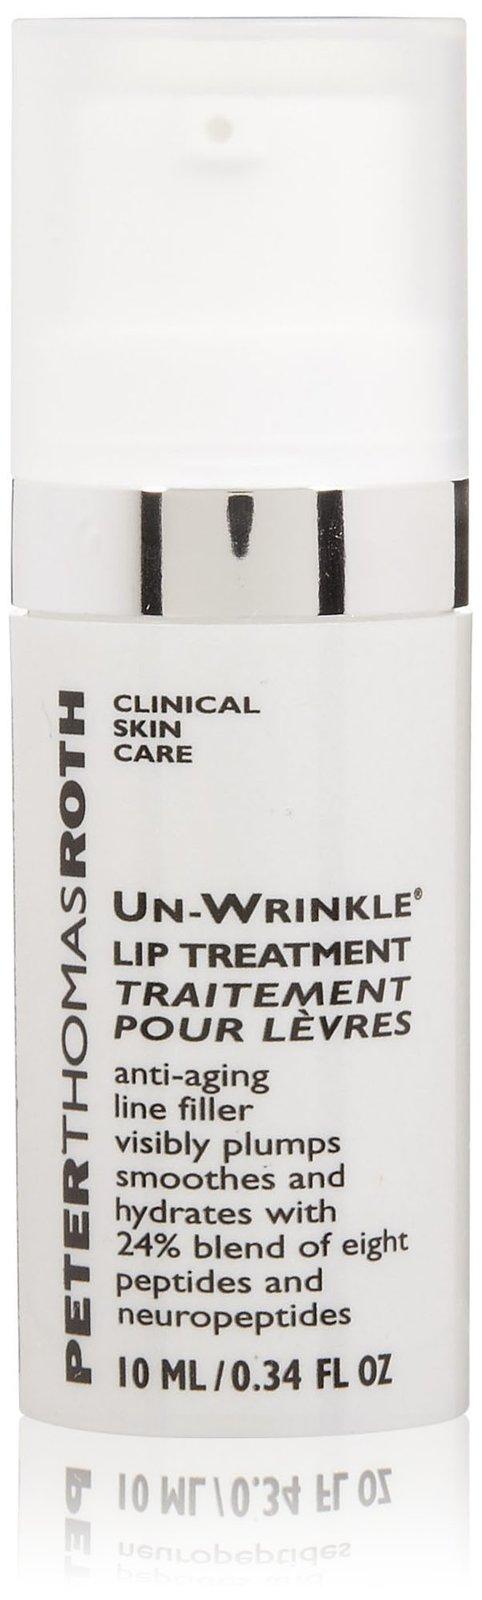 Peter Thomas Roth Un-wrinkle Lip Treatment